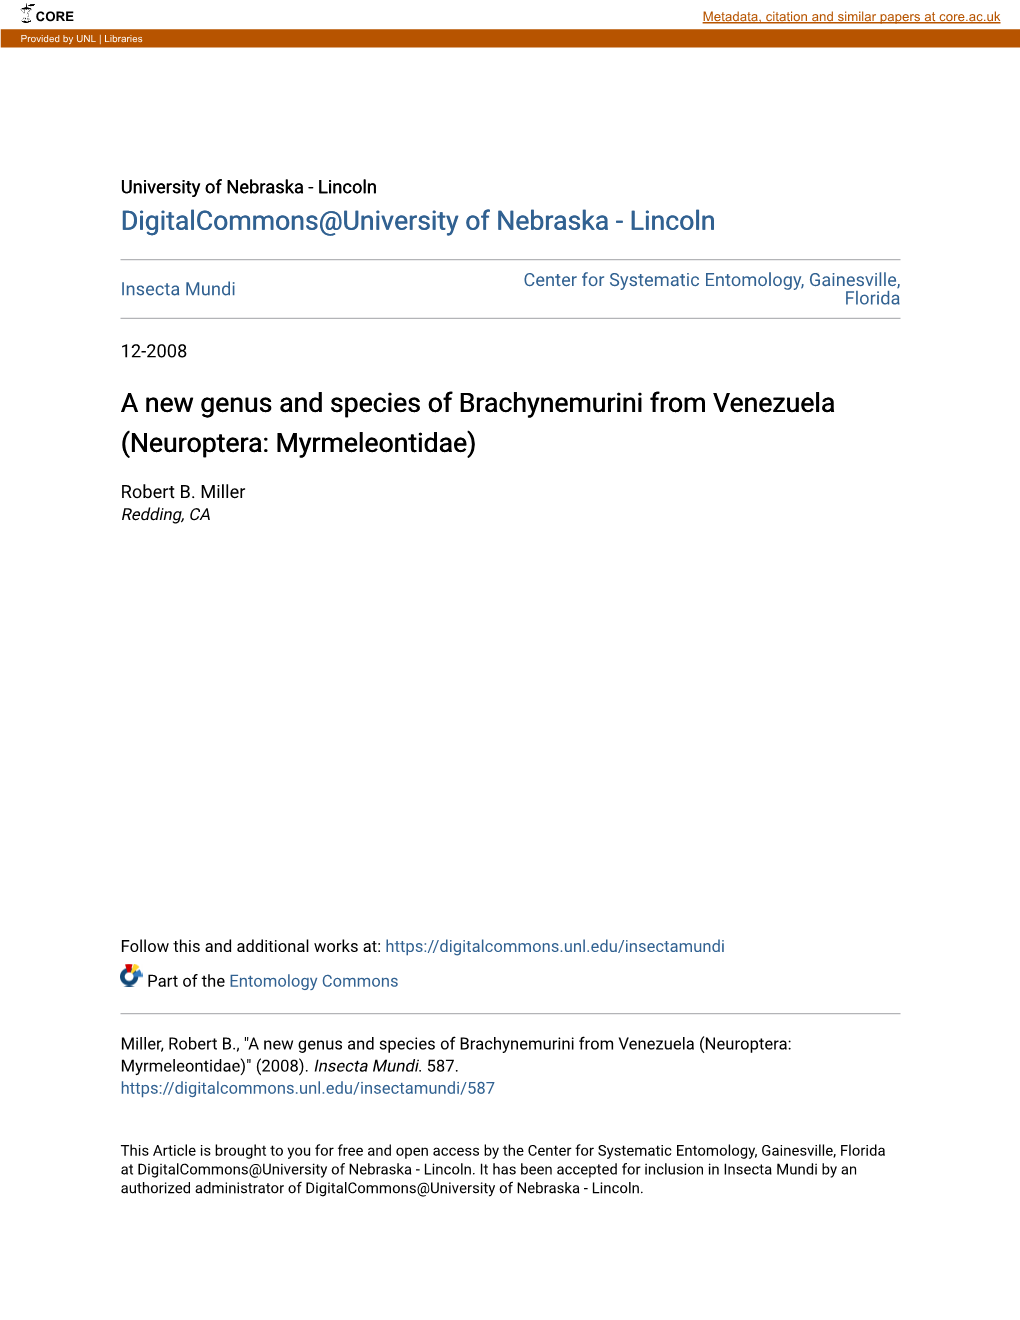 A New Genus and Species of Brachynemurini from Venezuela (Neuroptera: Myrmeleontidae)